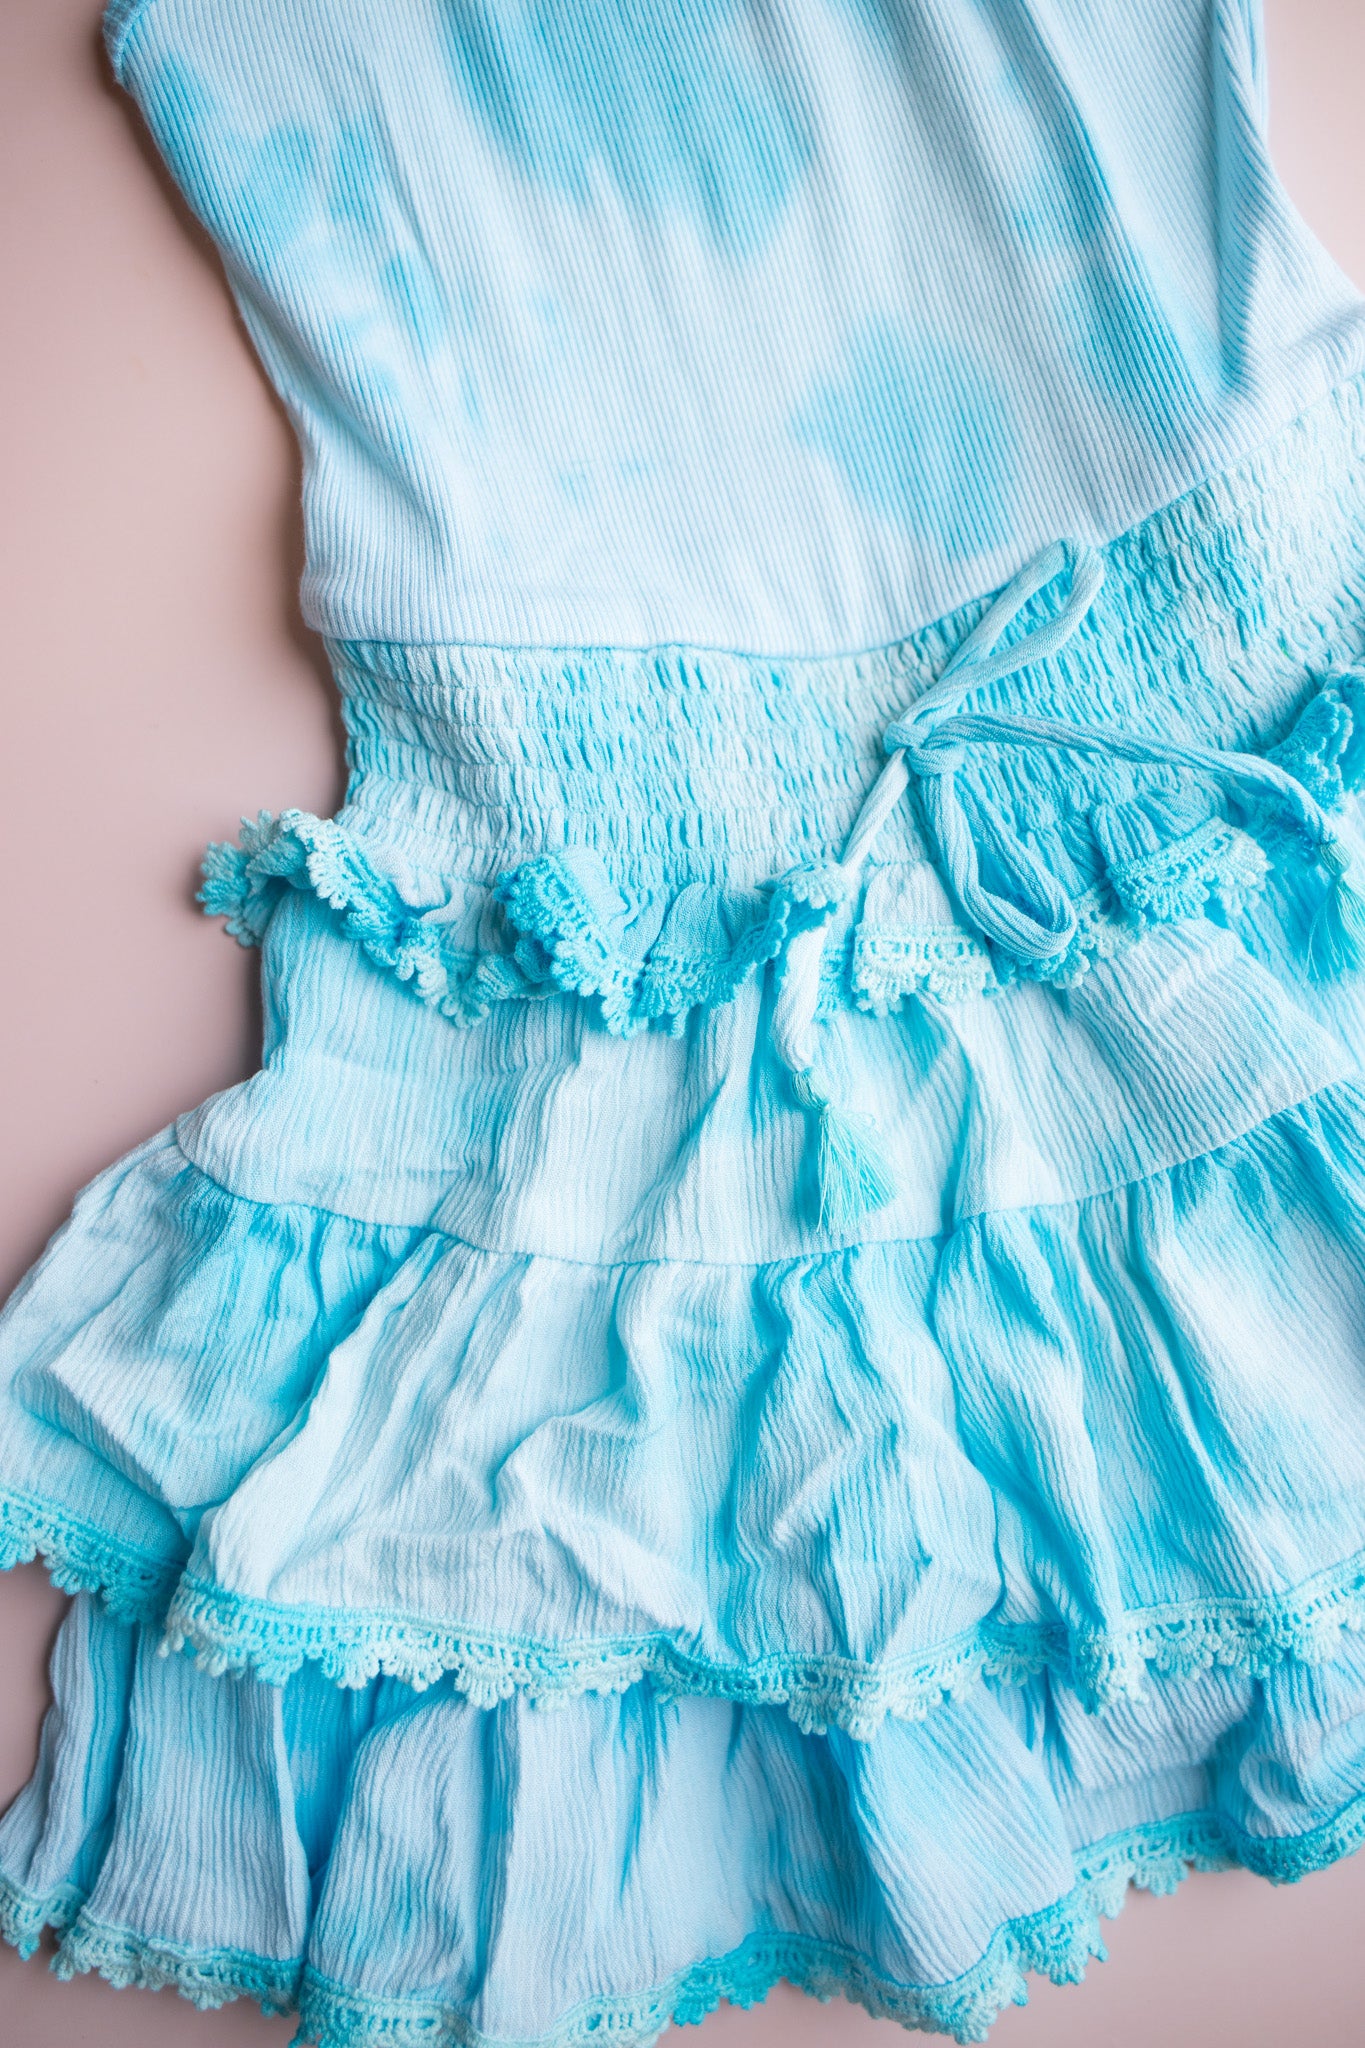 Tiered Tank Dress  | Turquoise Tie Dye